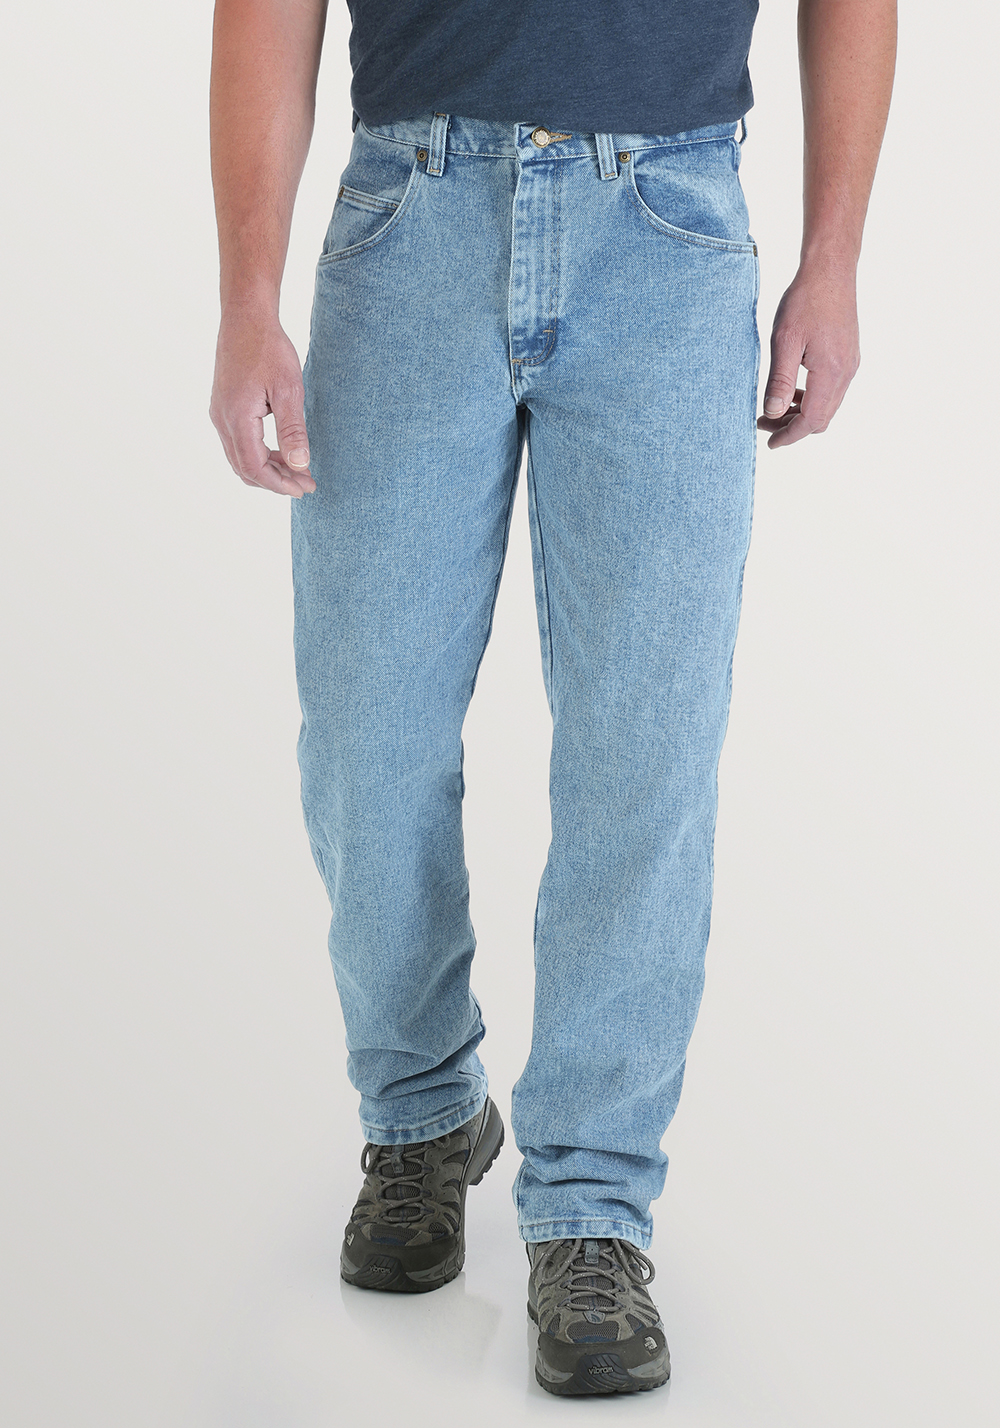 Picaldi STONE - Relaxed fit jeans - stone/stone blue denim - Zalando.de